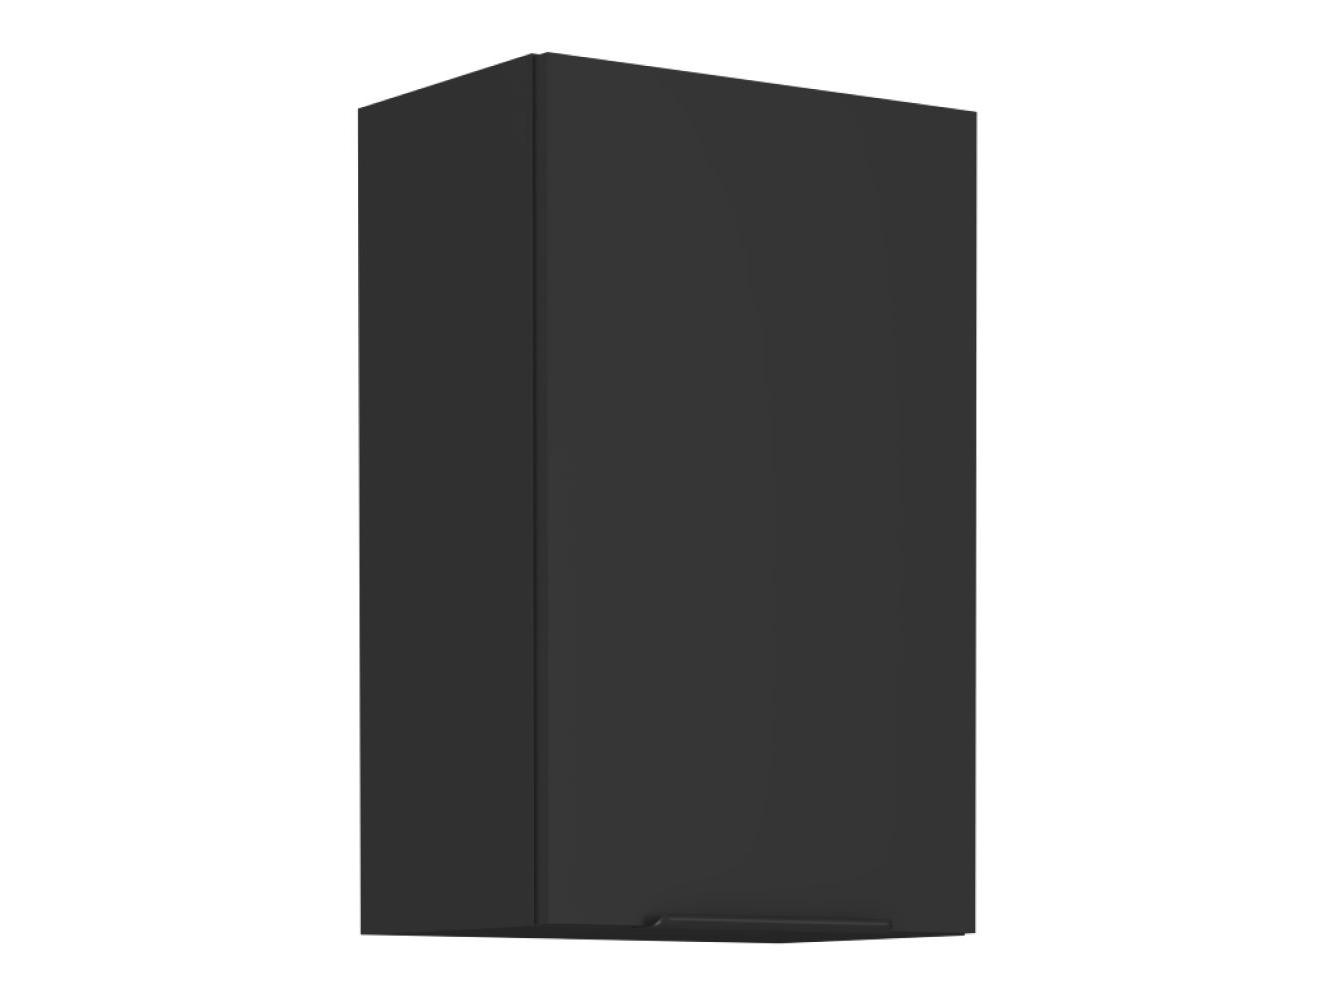 Horní kuchyňská skříňka Sobera 45 G 72 1F (černá)